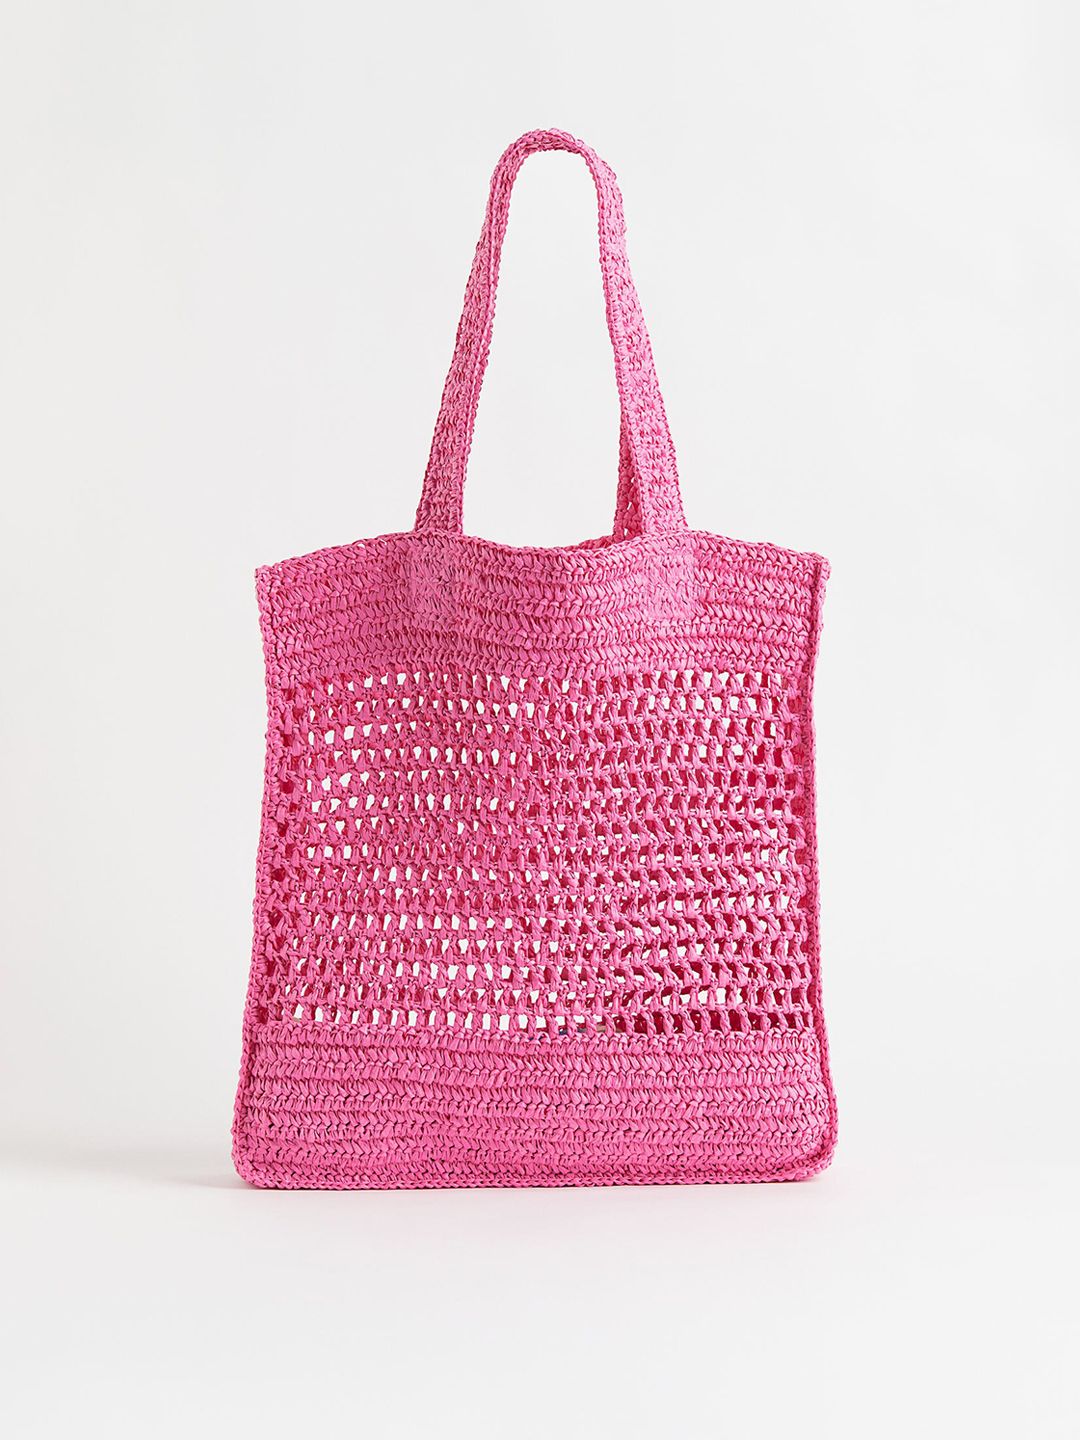 H&M Pink Straw Shopper Tote Bag Price in India